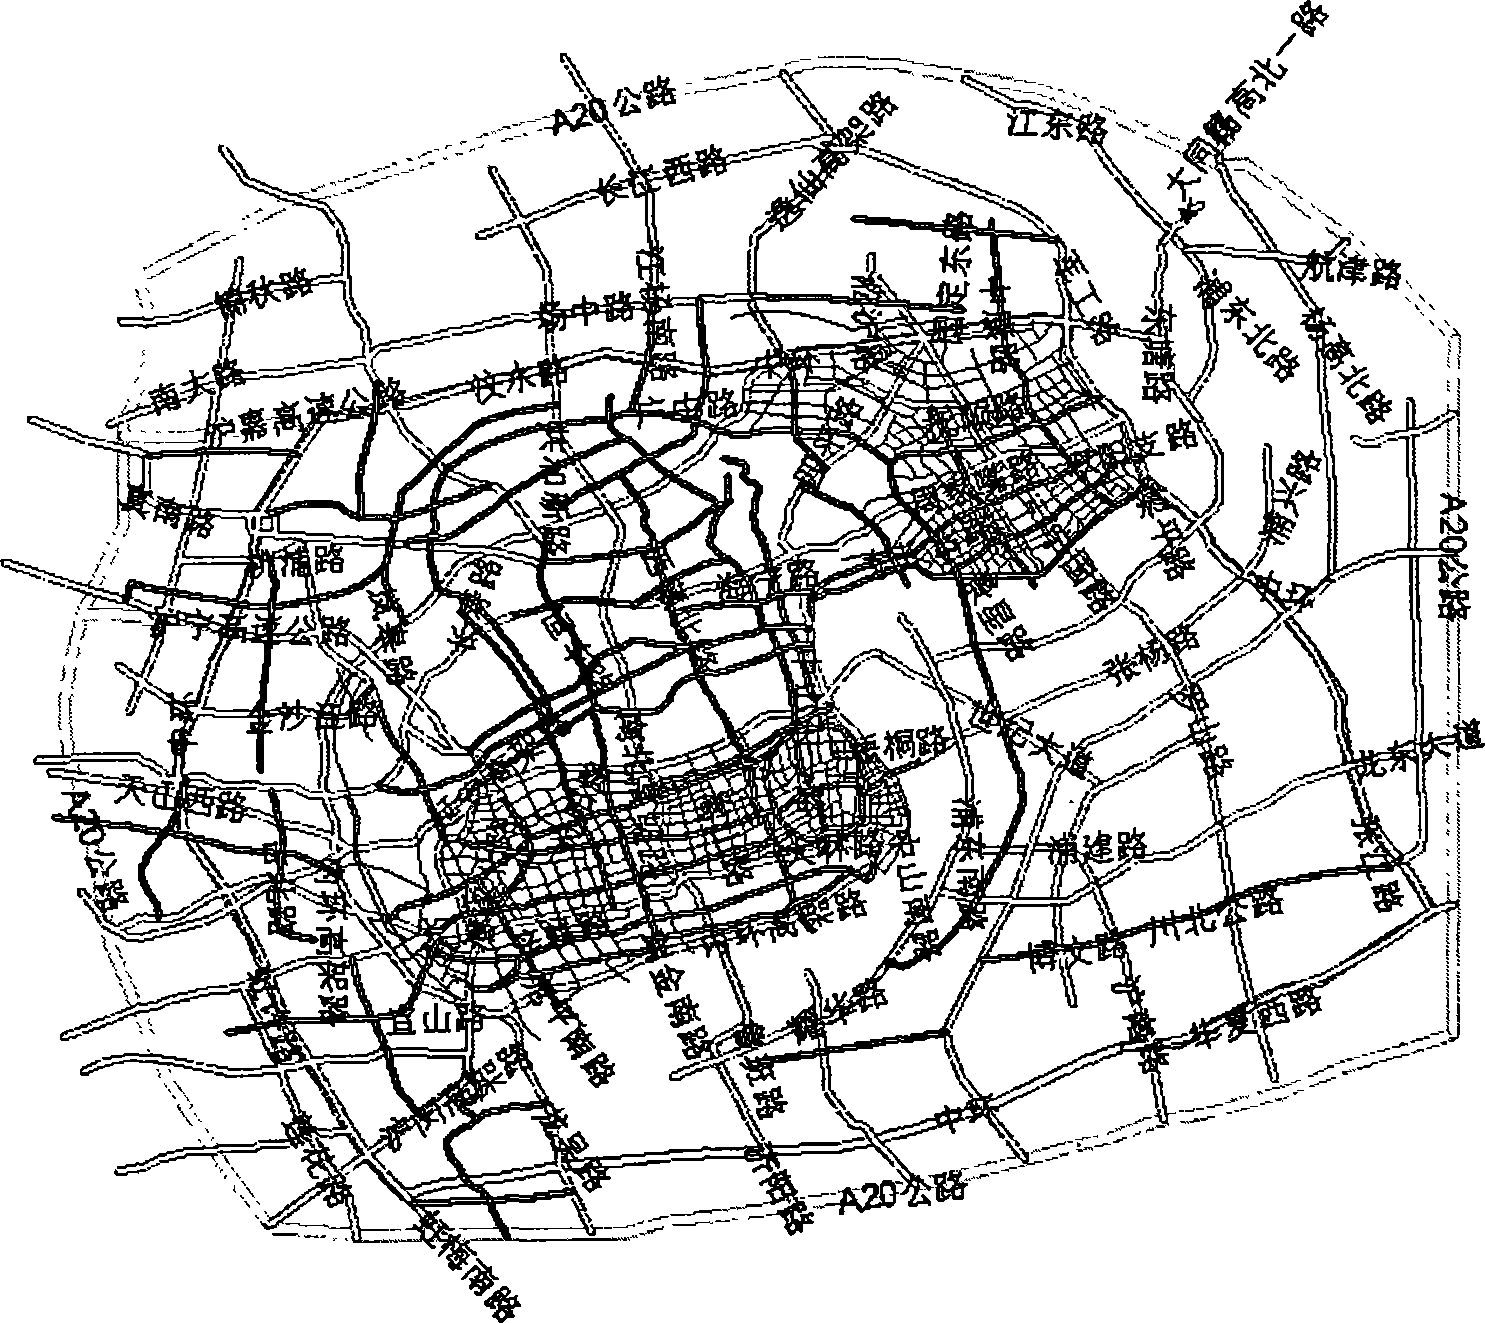 Road network modeling method based on road element